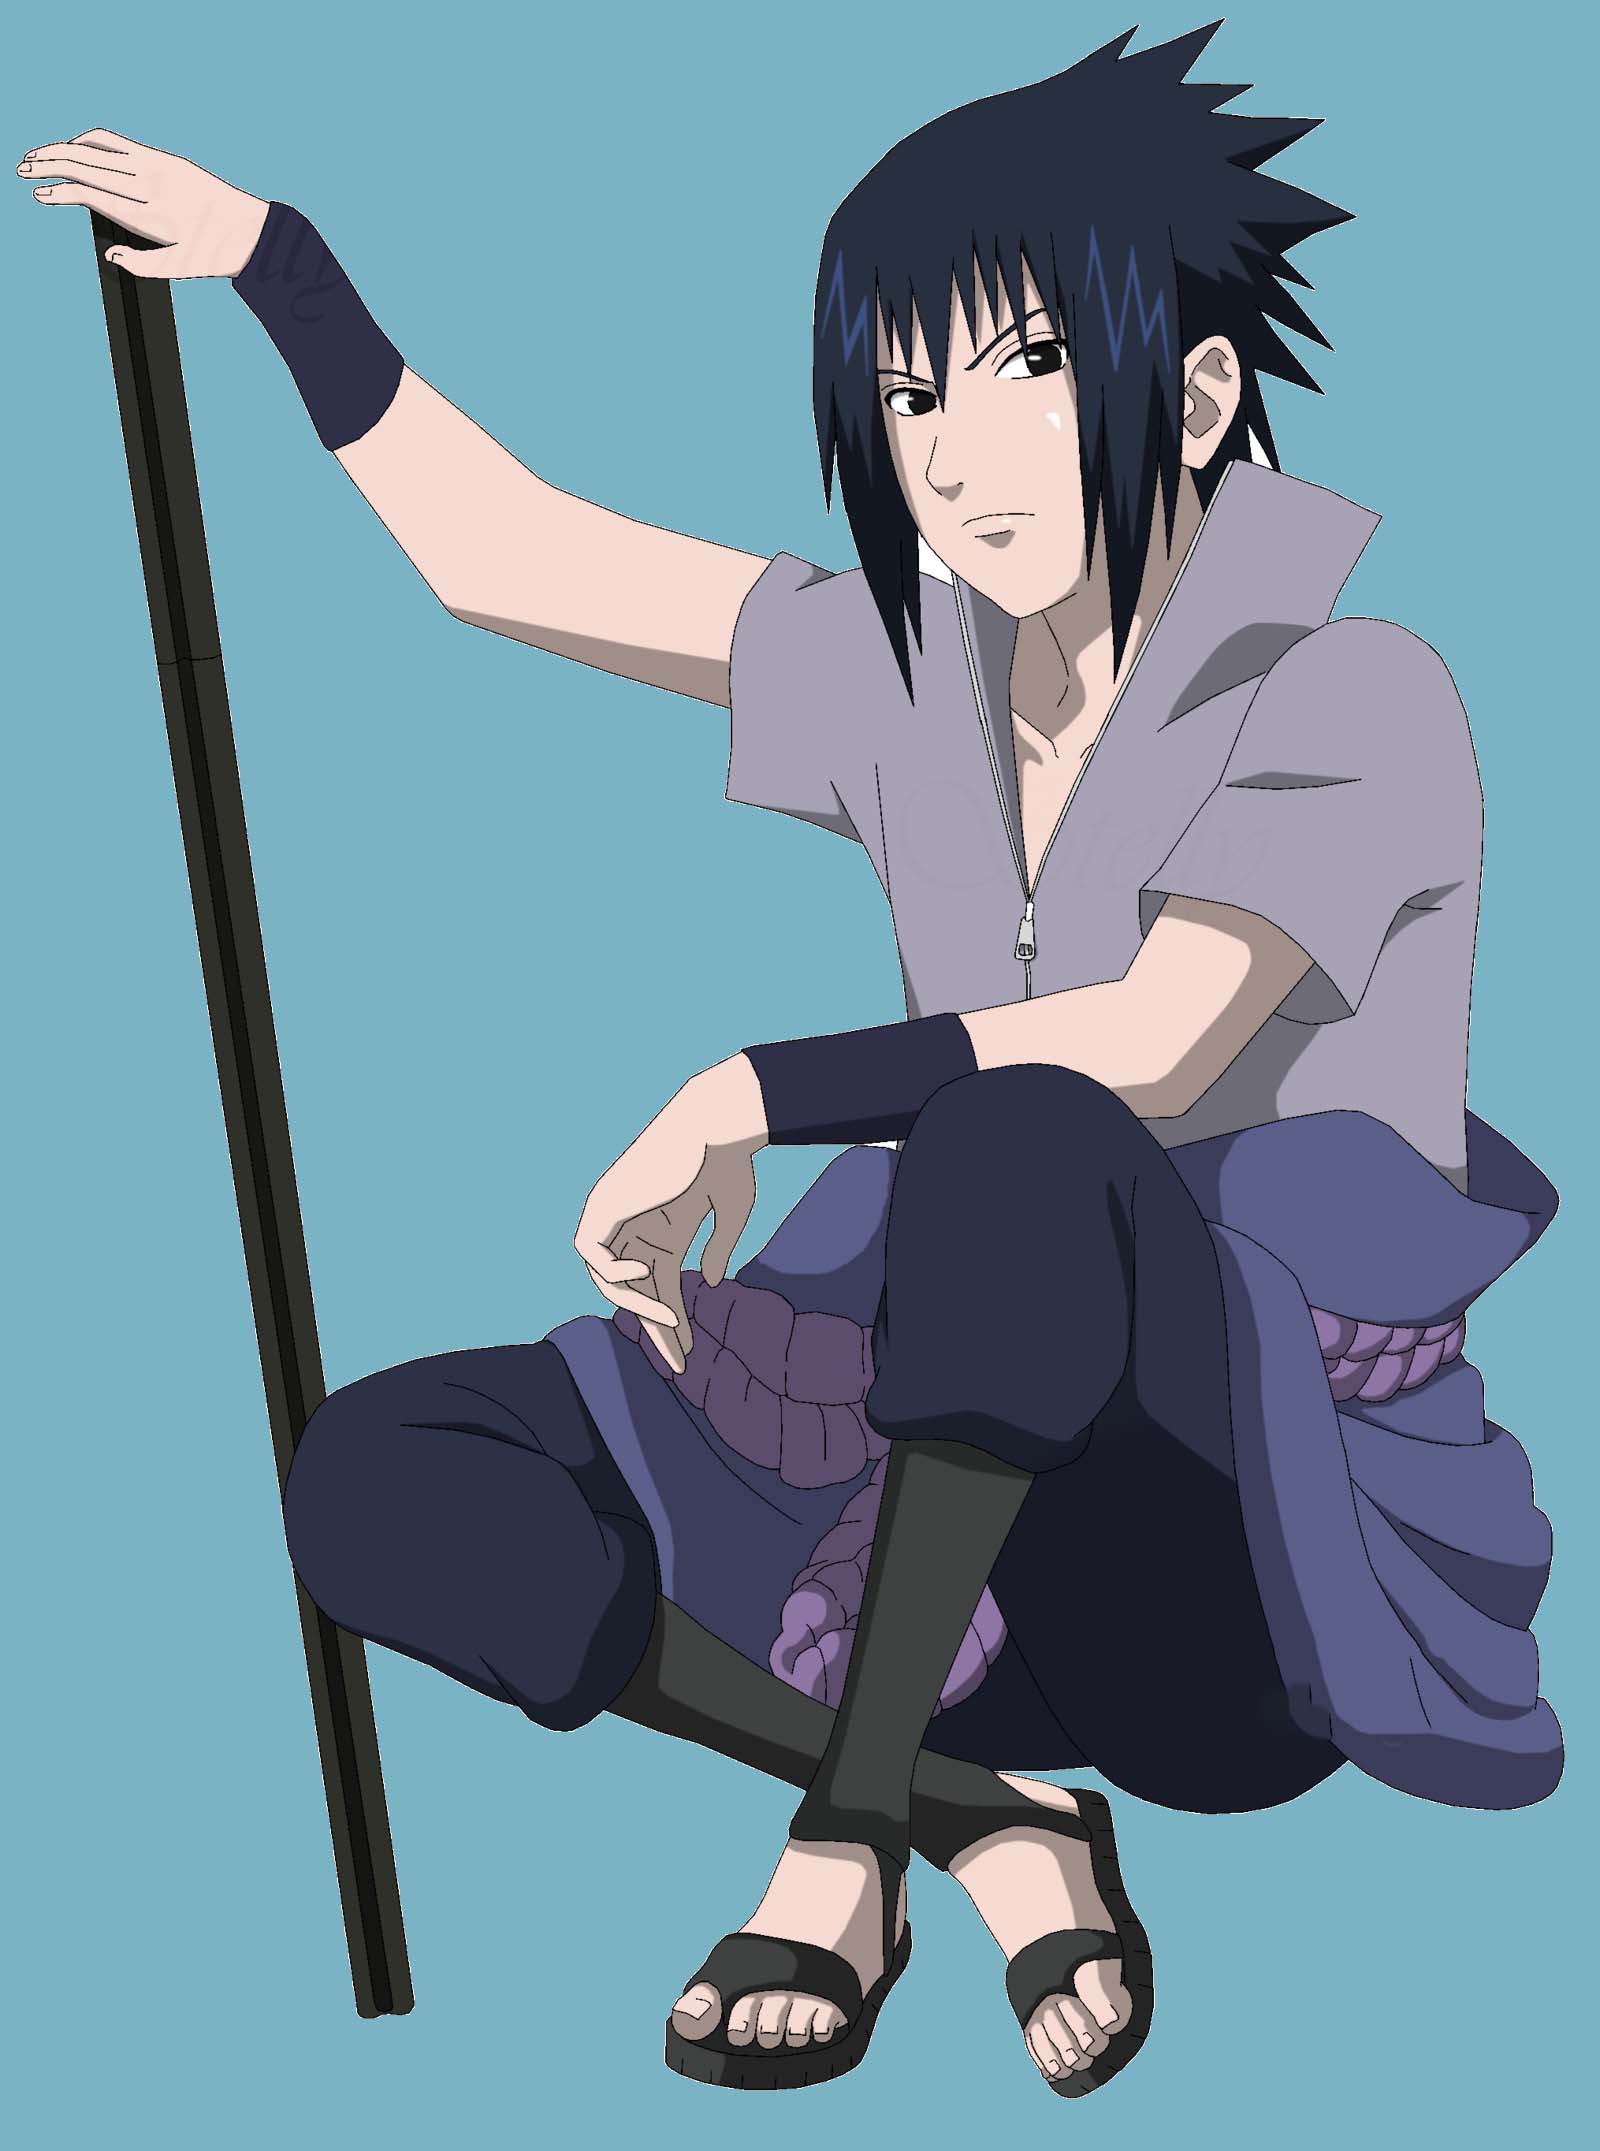 Ảnh Sasuke đẹp, ngầu